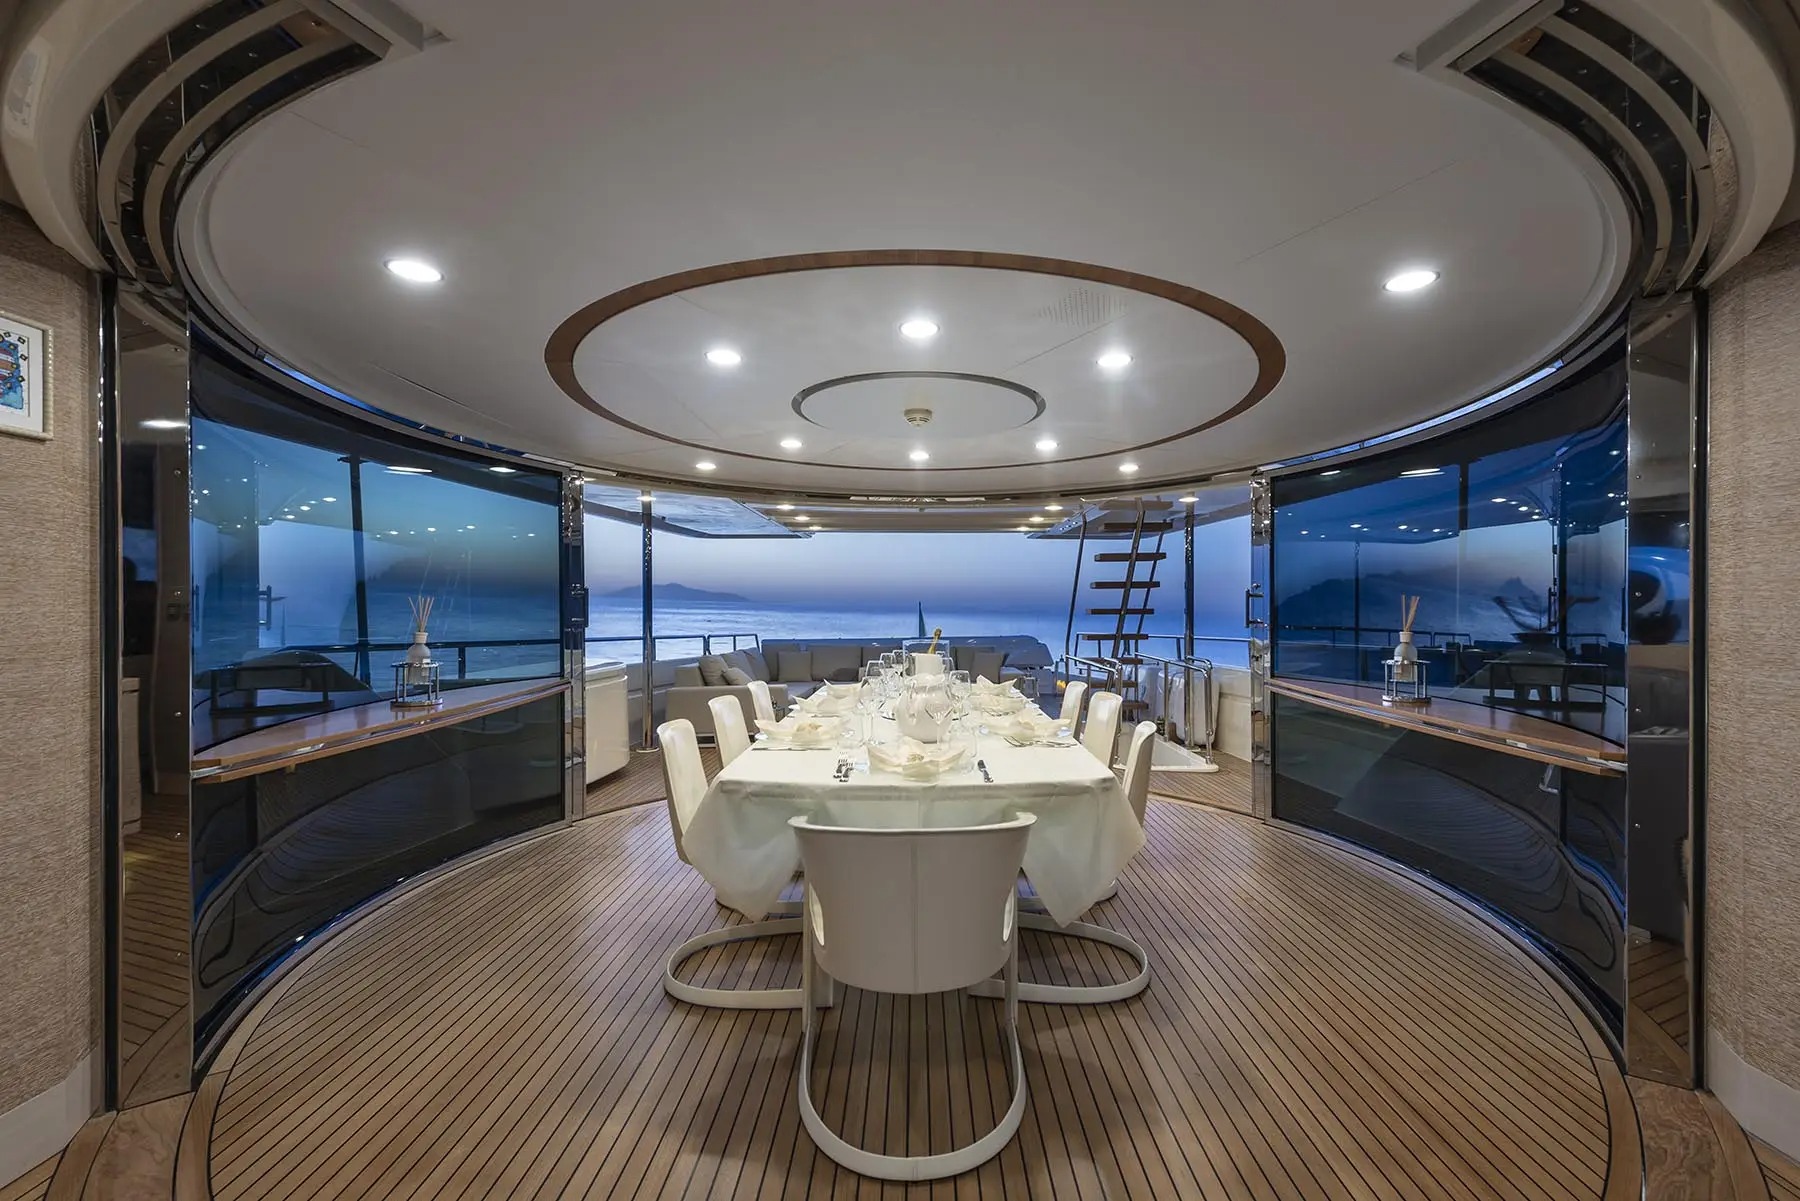 Stunning circular dining room on the upper deck